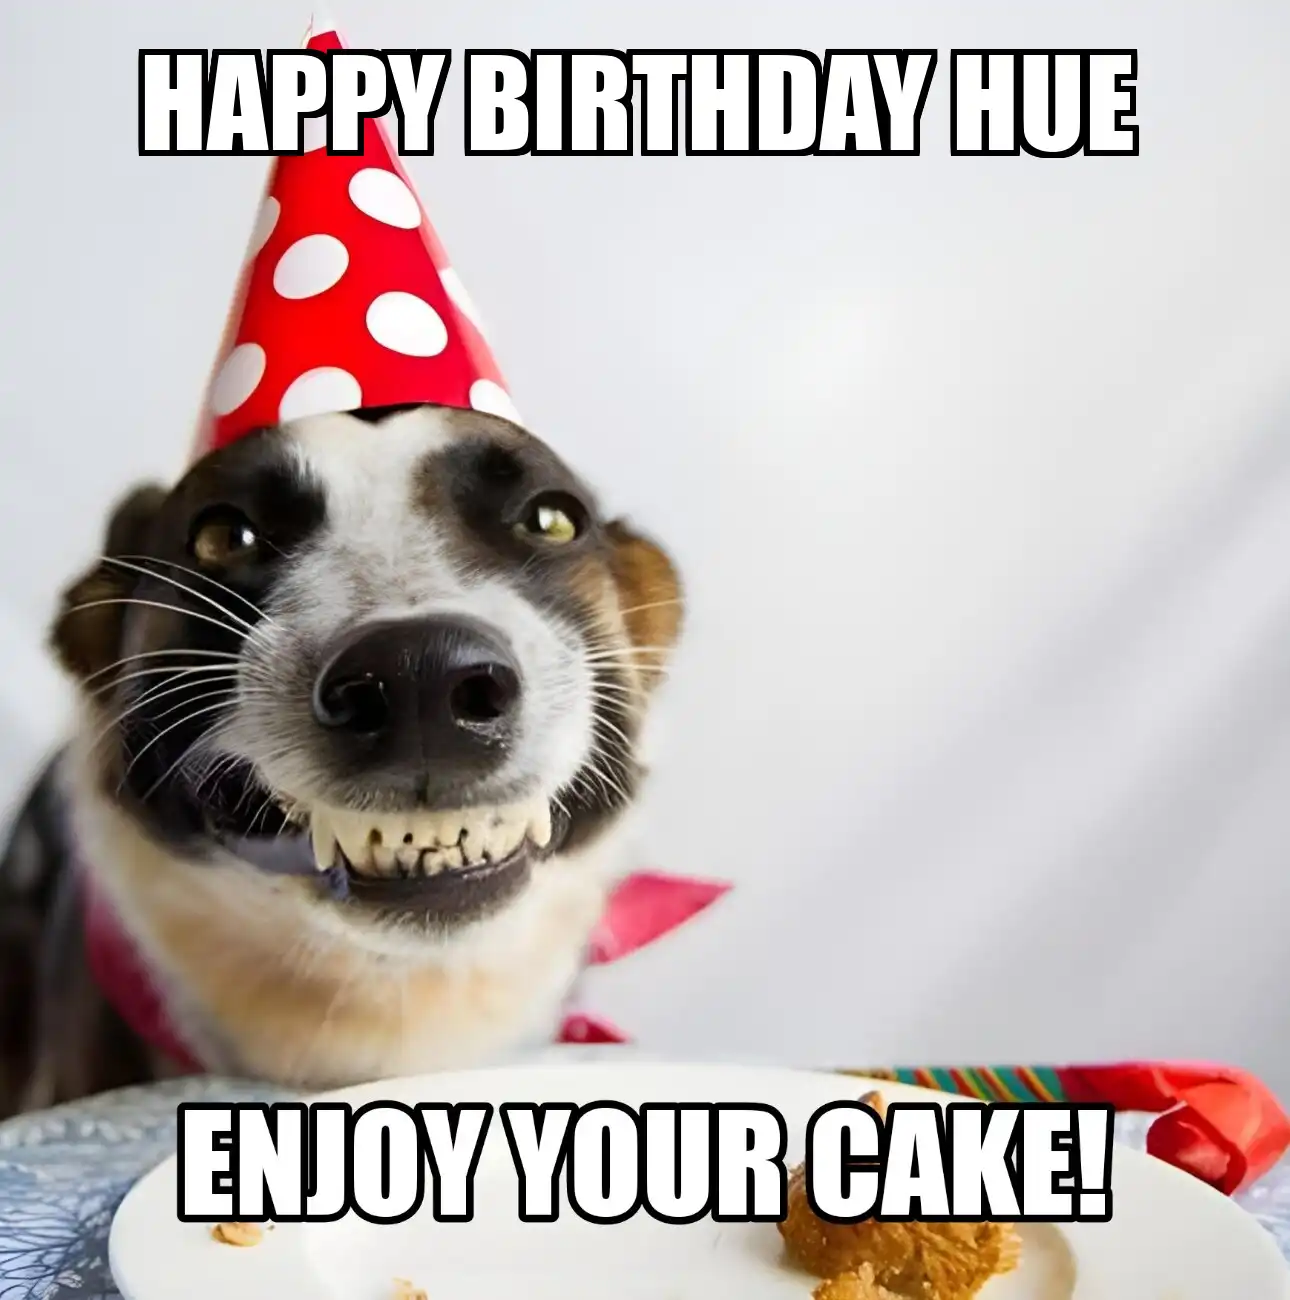 Happy Birthday Hue Enjoy Your Cake Dog Meme